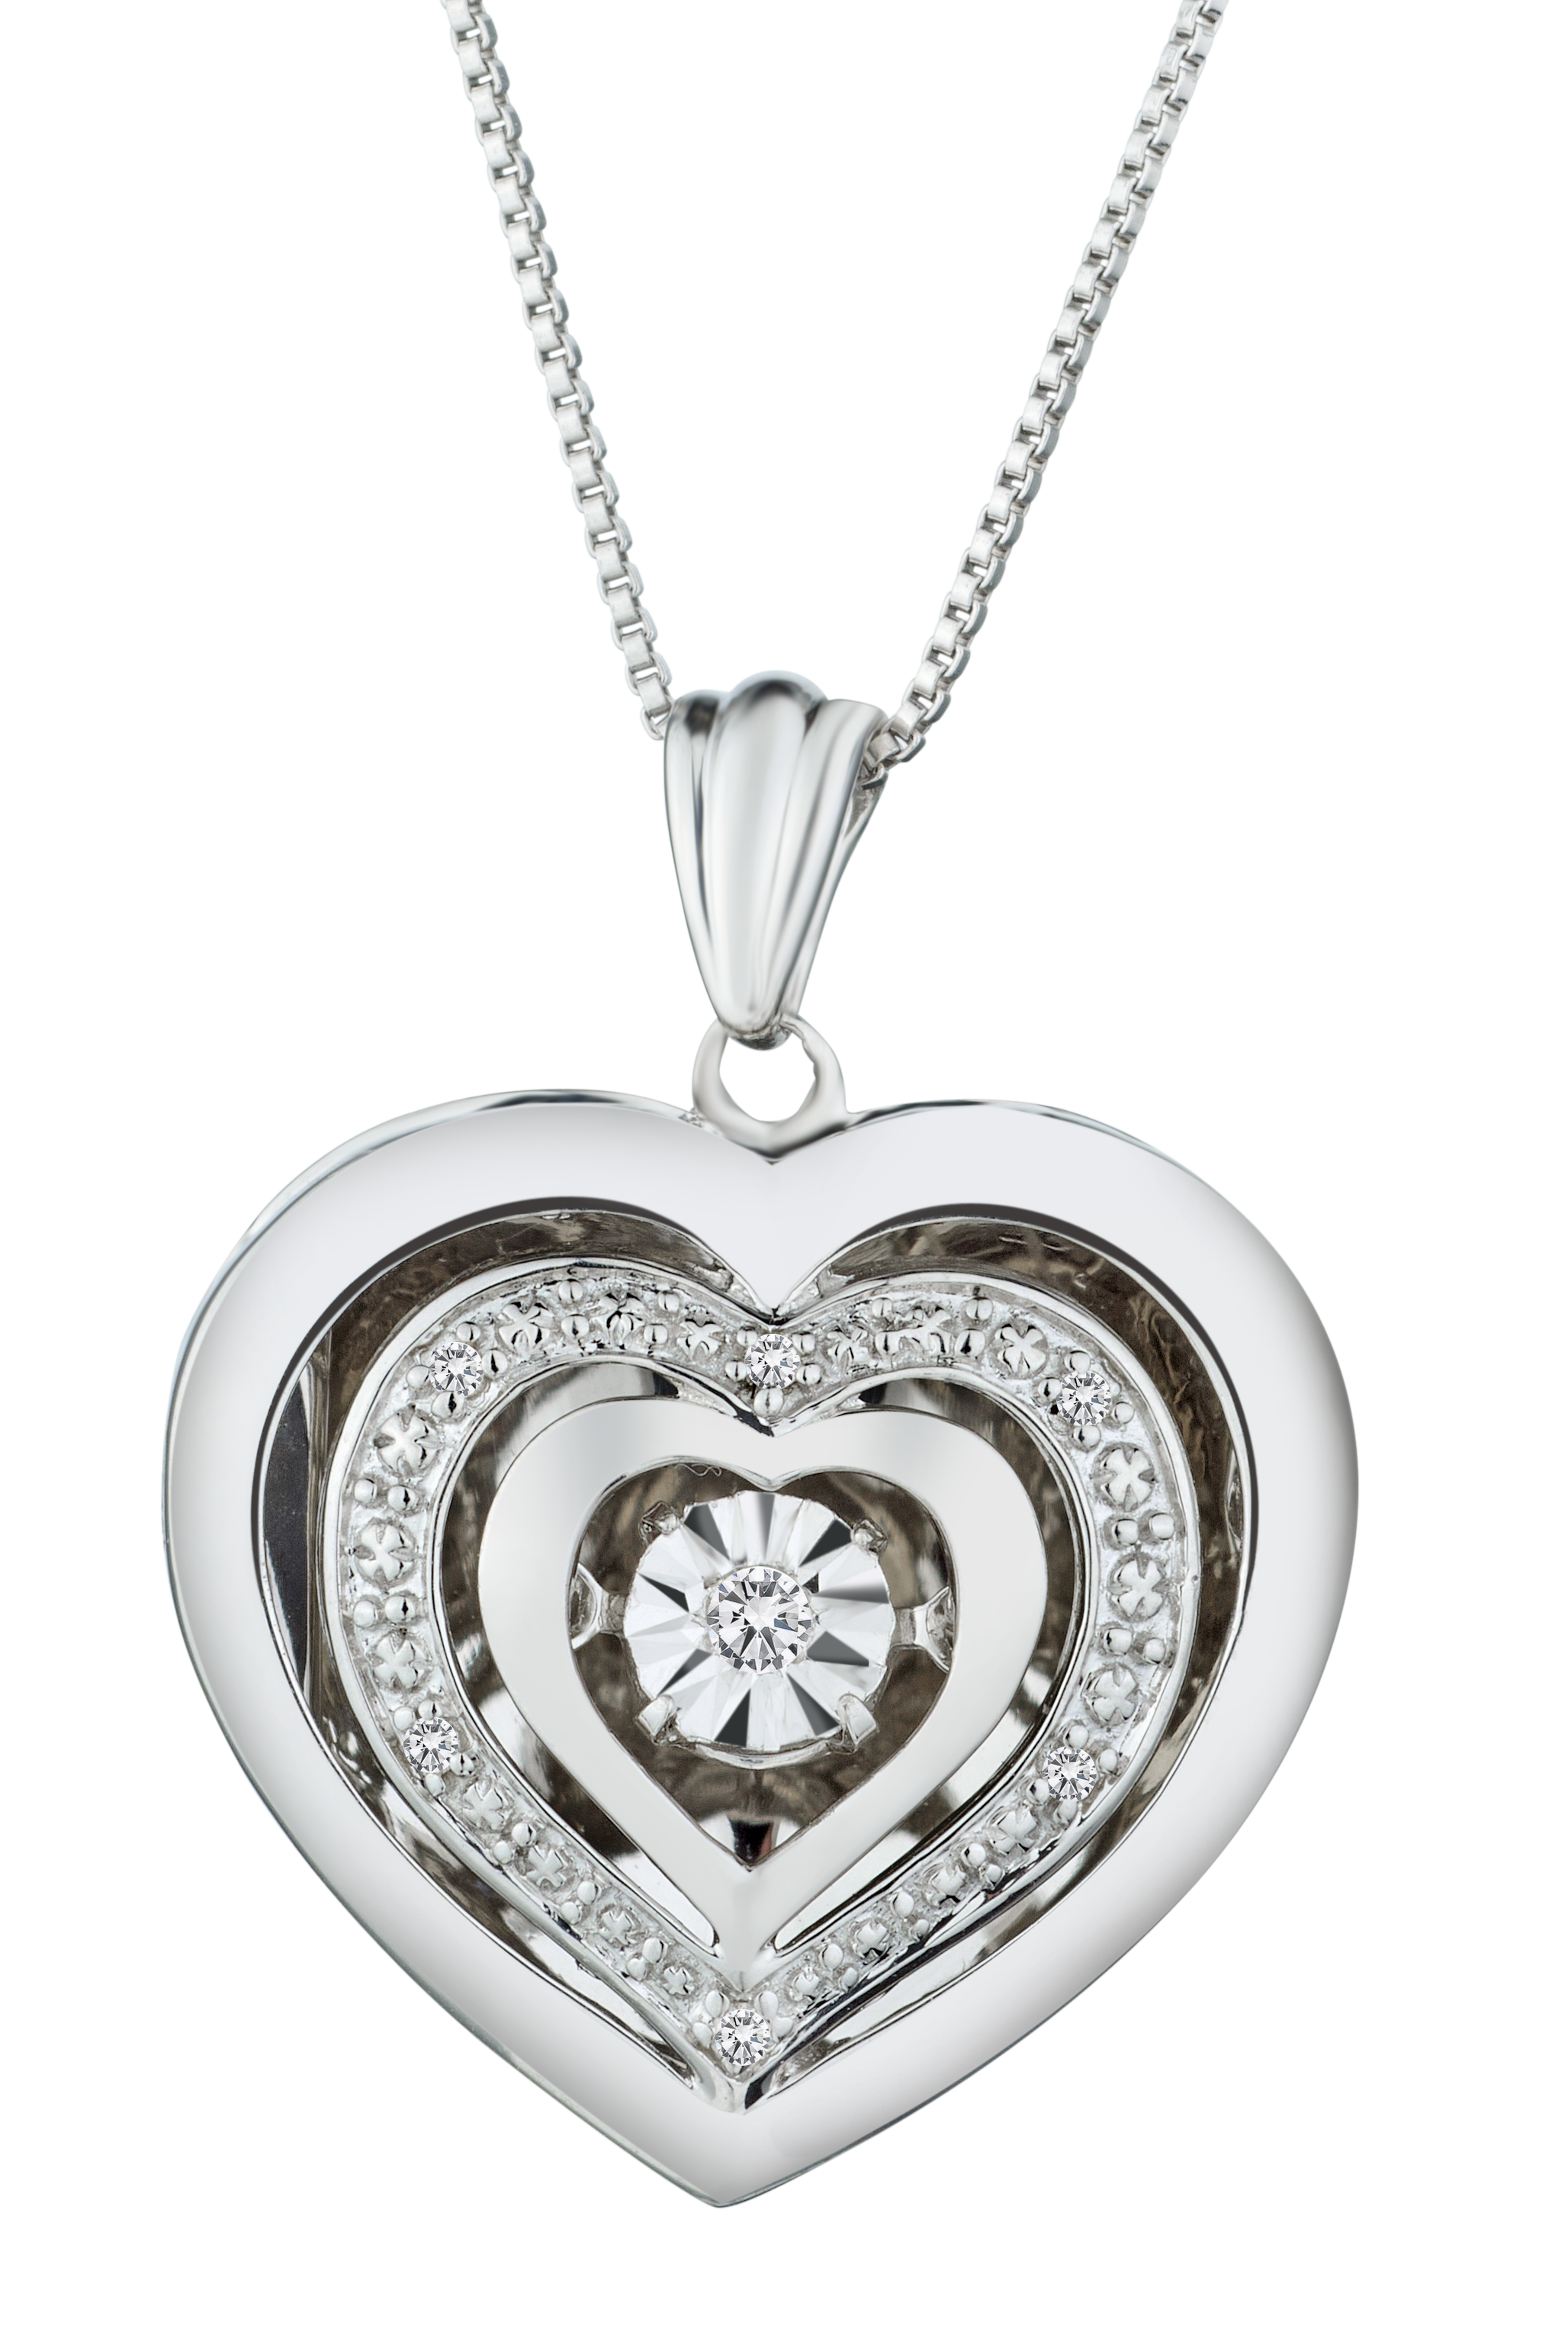 .05 Carat of Diamond Shimmer Heart Motion Locket, Silver.....................NOW